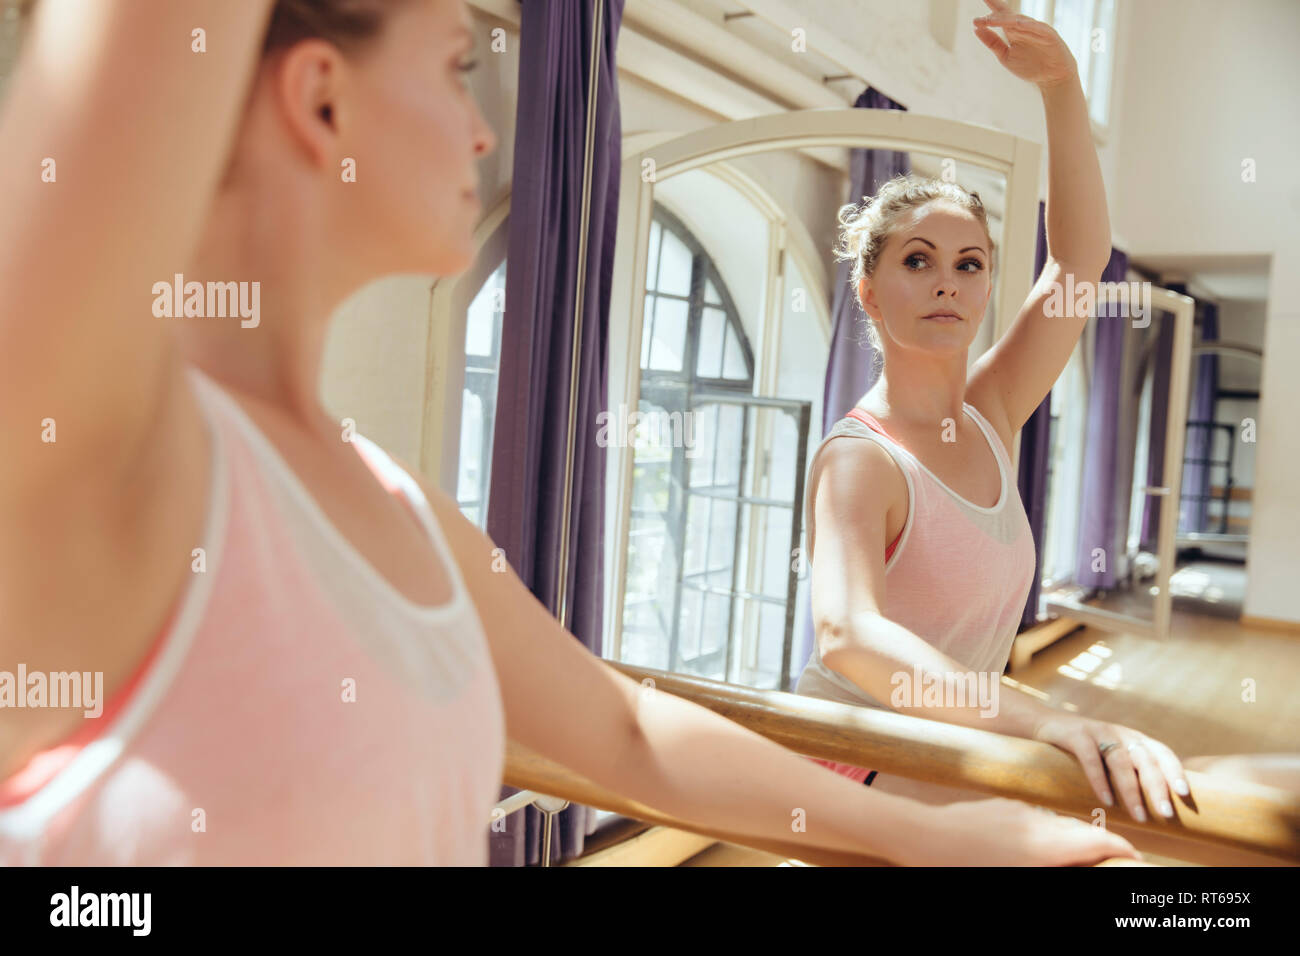 Ballet dancer training in dance studio Stock Photo